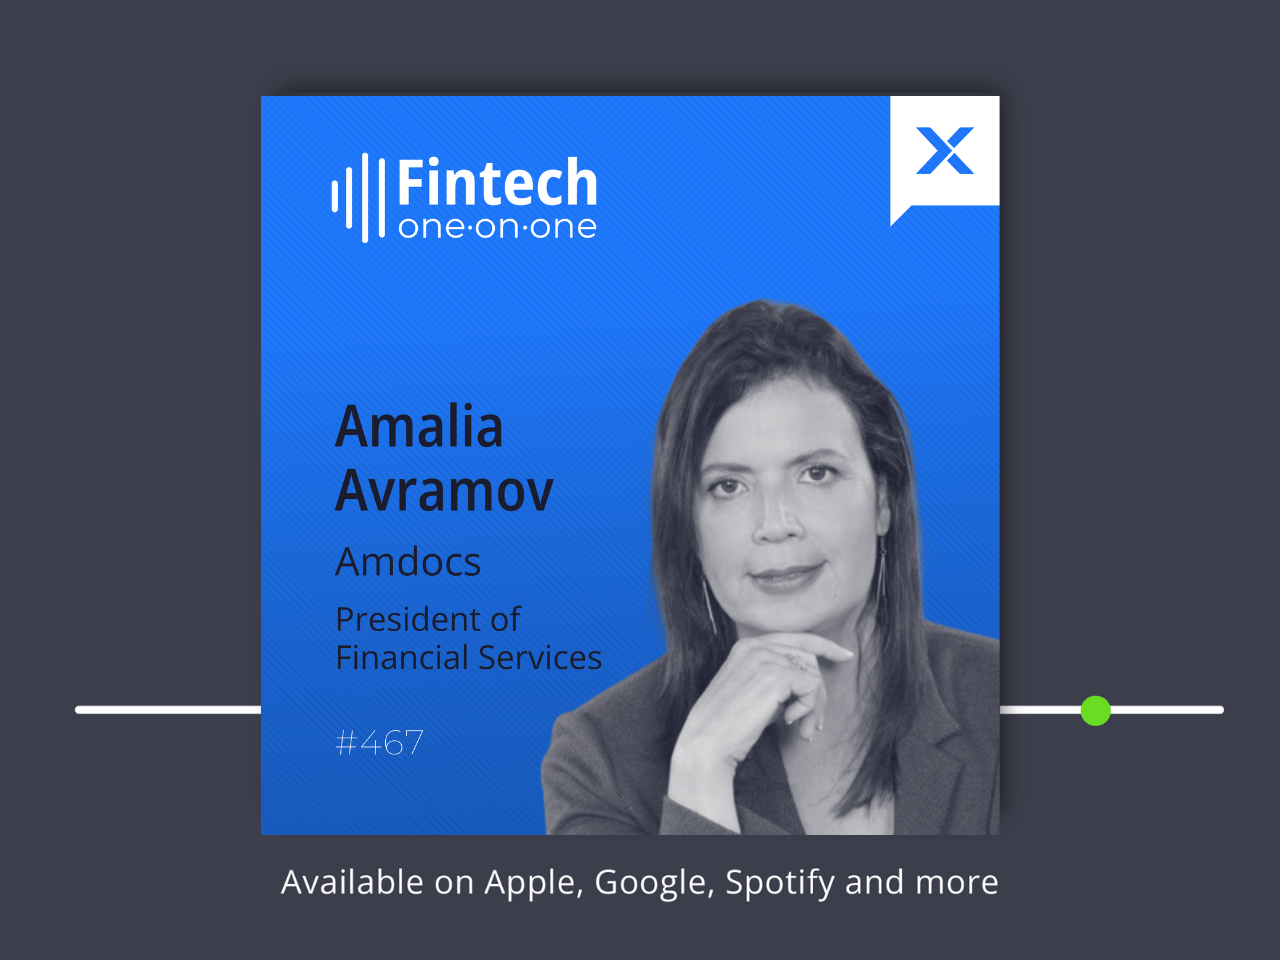 Amalia Avramov, President for Financial Services, Amdocs